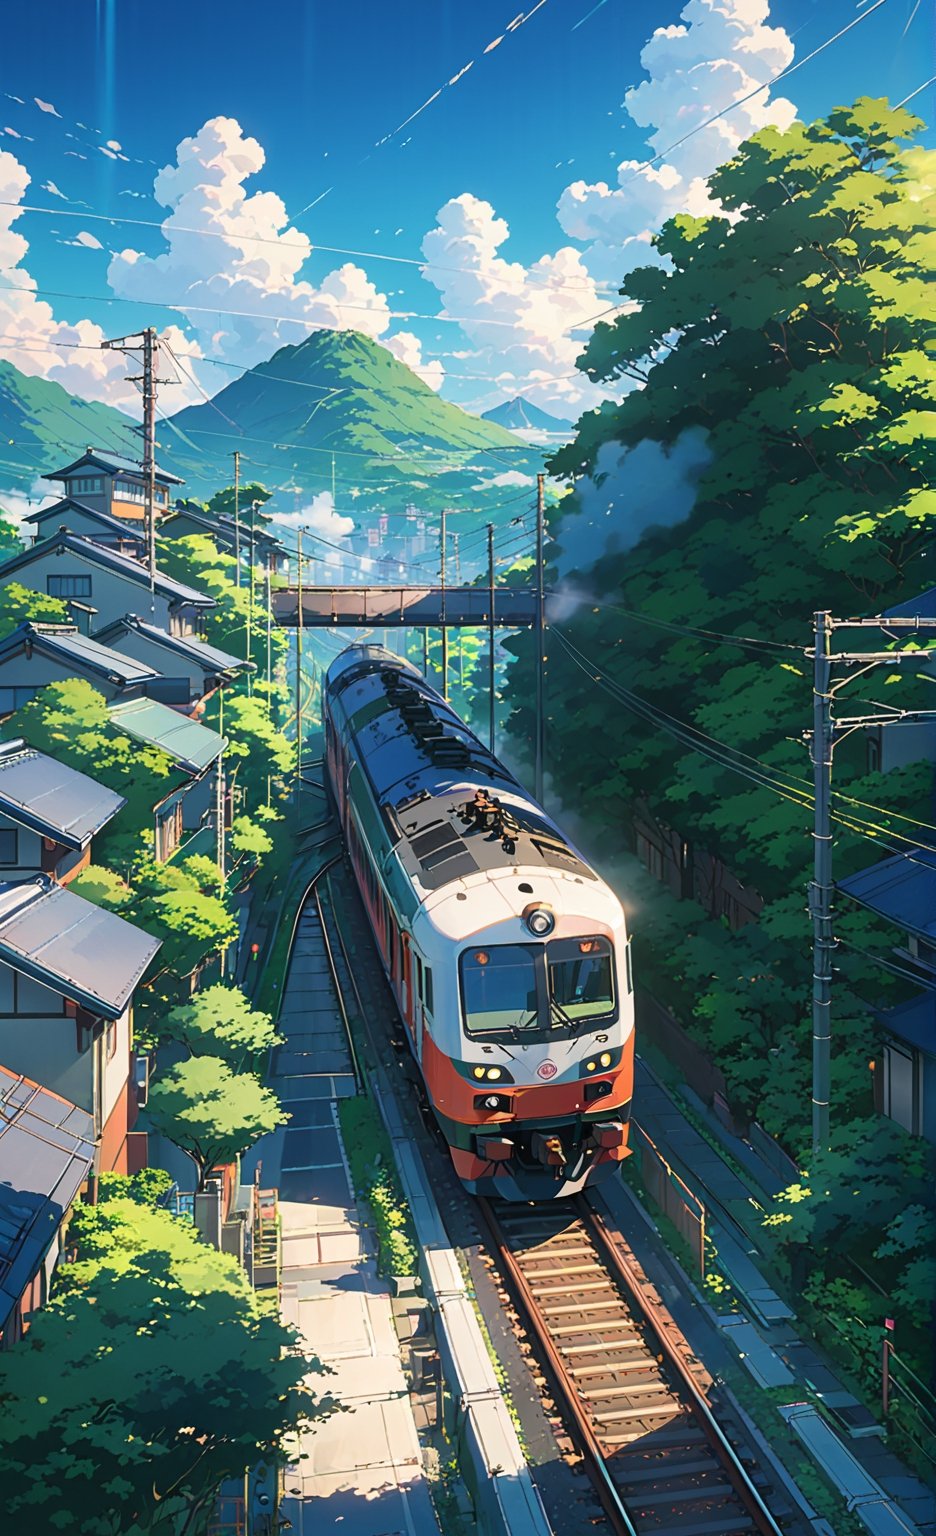 Masterpiece, anime train on track through a residential area of the town, Makoto Shinkai style picture, pixiv, concept art, lofi art style, reflection. lofi art, beautiful anime scenes, anime scenery, detailed scenery, details enhanced.